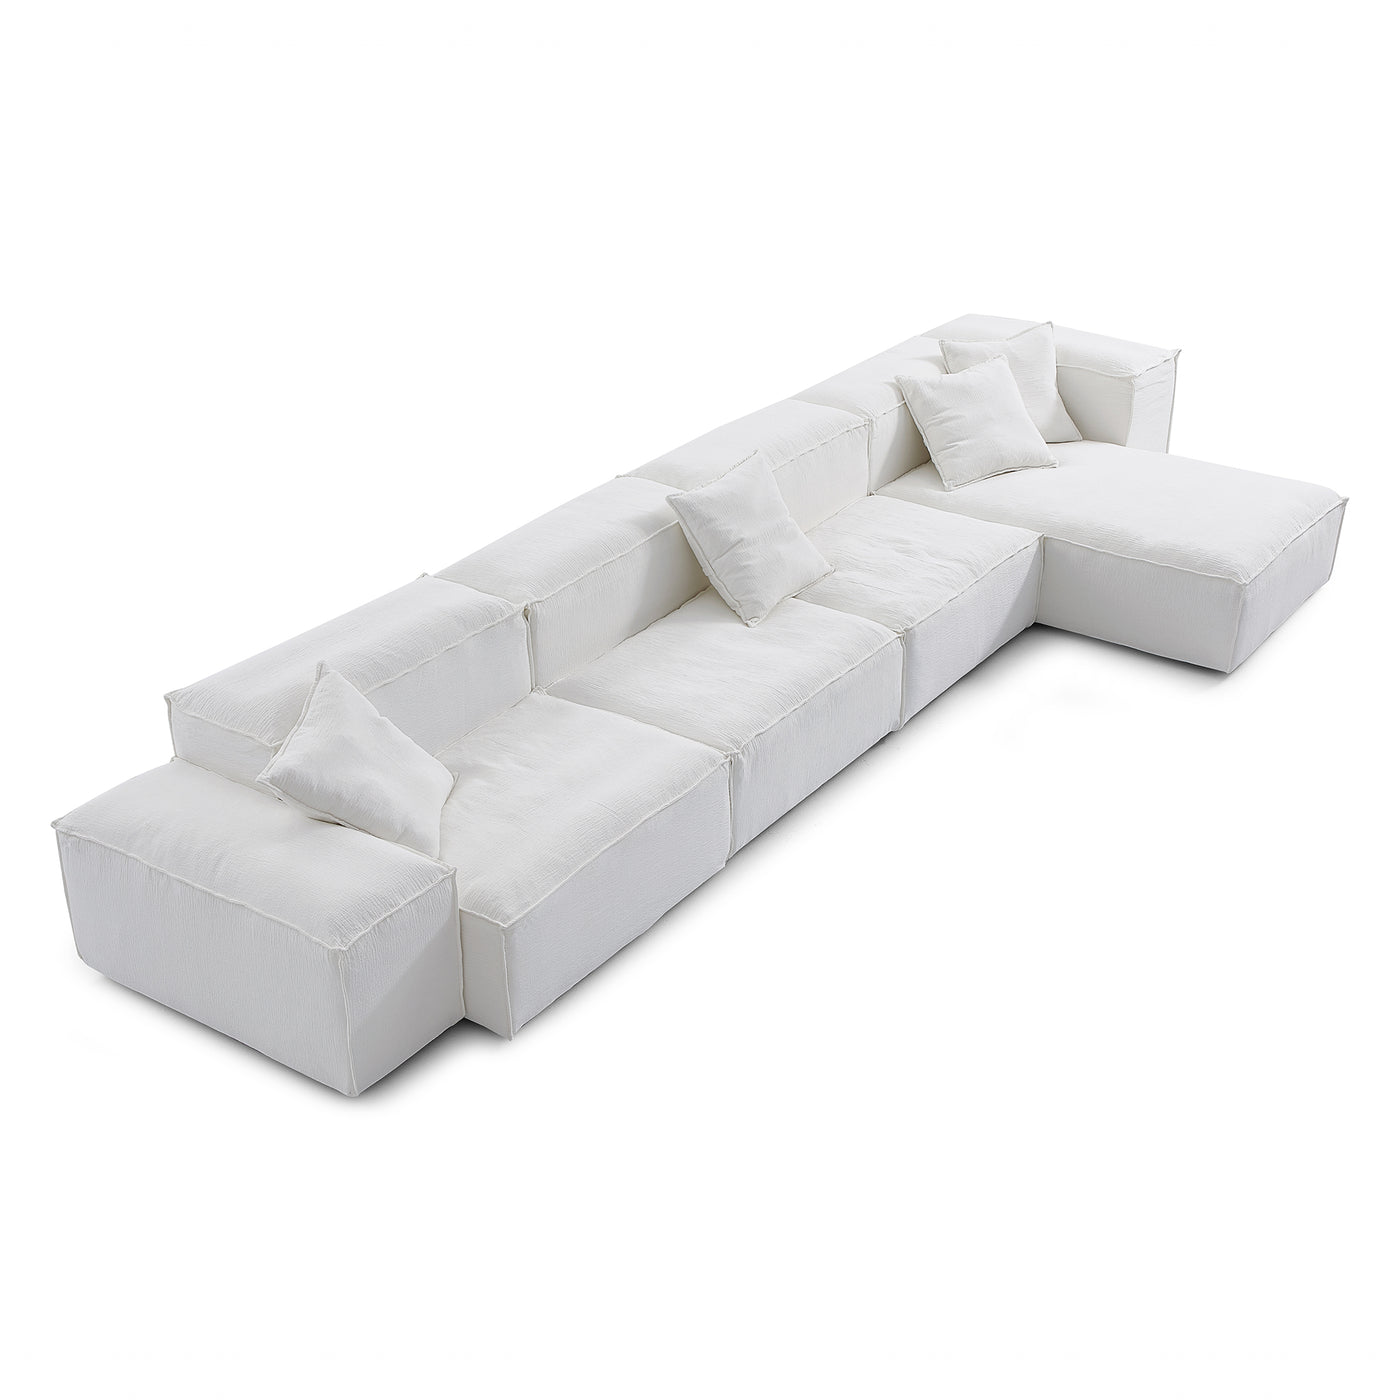 Freedom Modular Khaki Sectional Sofa-White-High & Low-181.1″